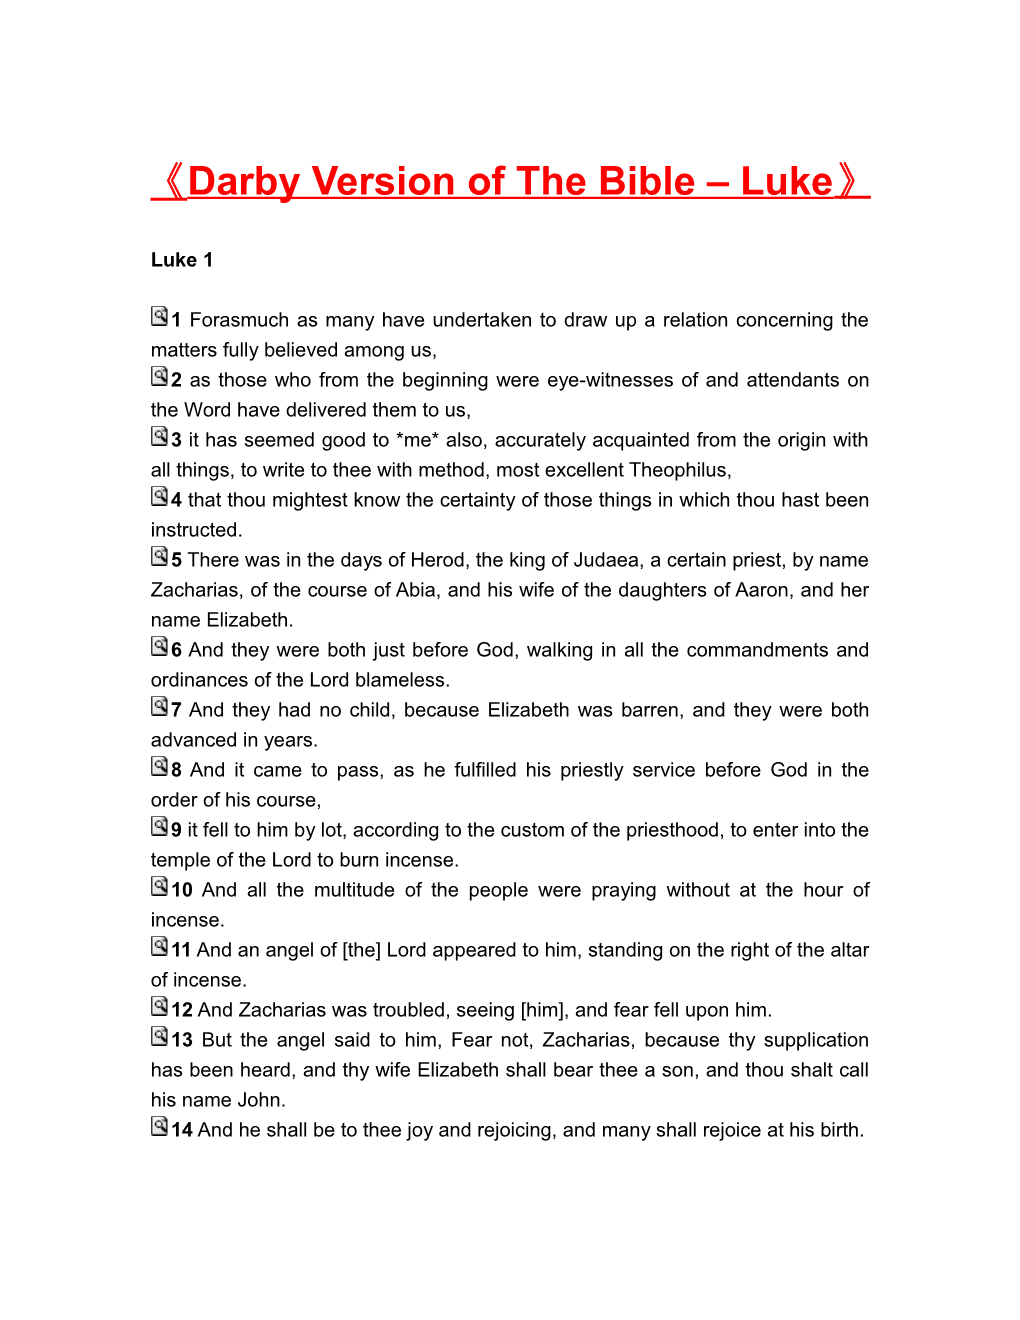 Darby Version of the Bible Luke